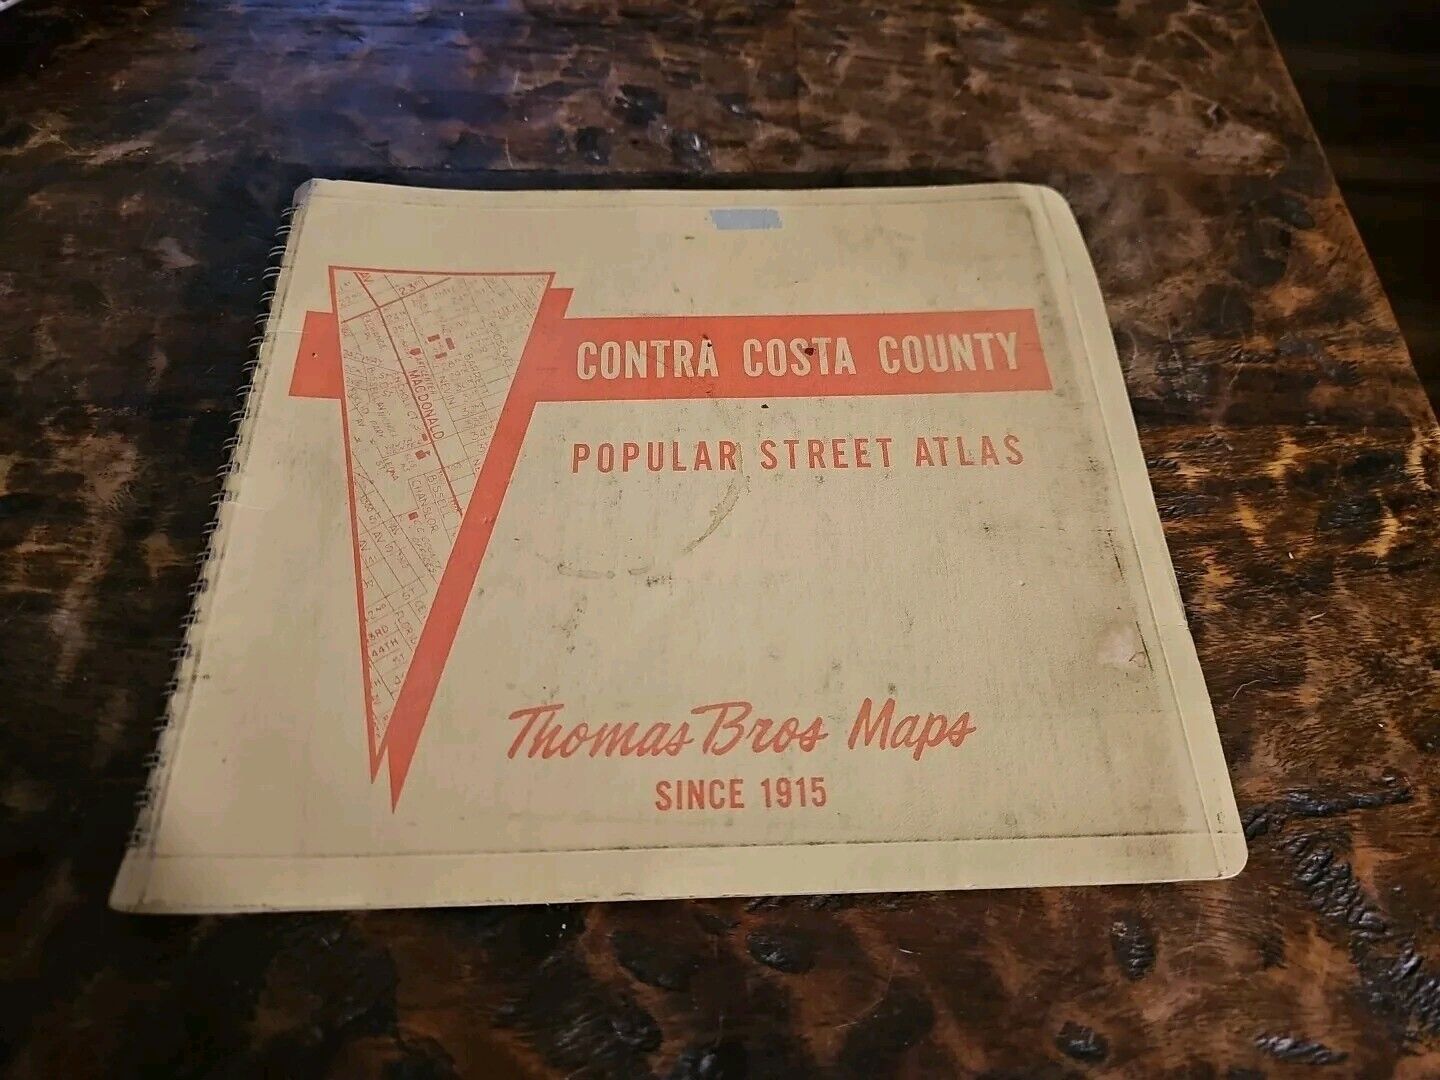 Contra Costa County Popular Street Atlas Thomas Bros Maps 1972